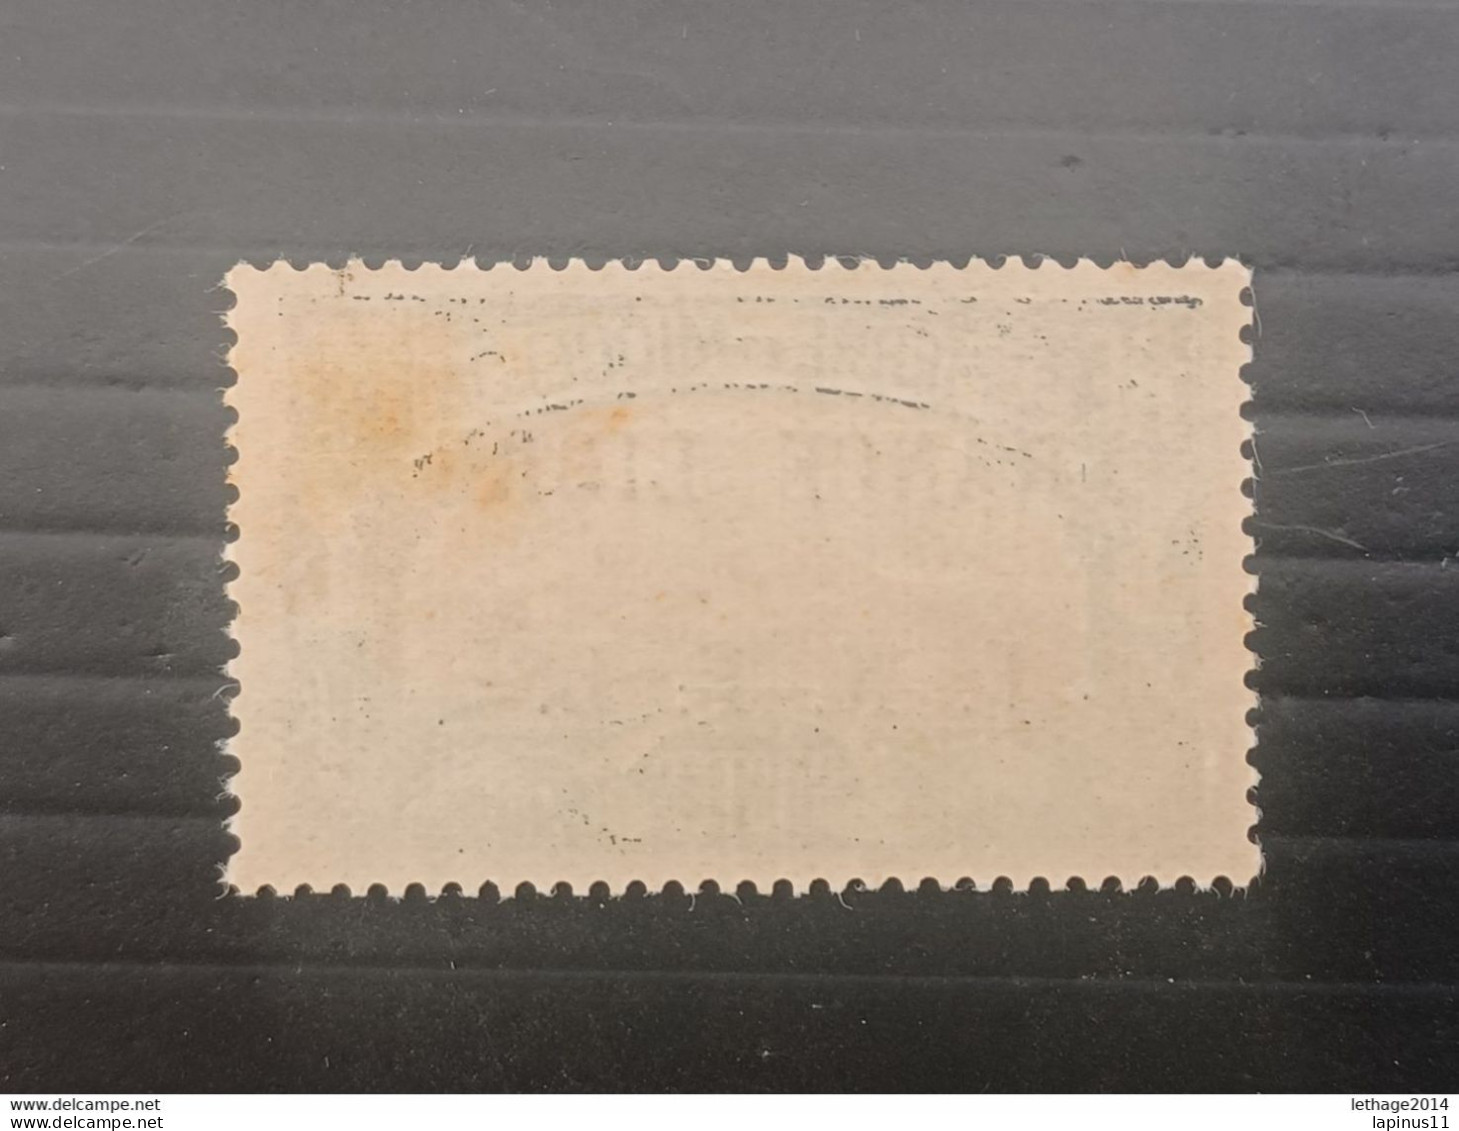 ST PIERRE ET MIQUELLON 1941 STAMPS OF 1922 OVERPRINT FRANCE LIBRE F N F L CAT. YVERT N. 242 MNH - Unused Stamps